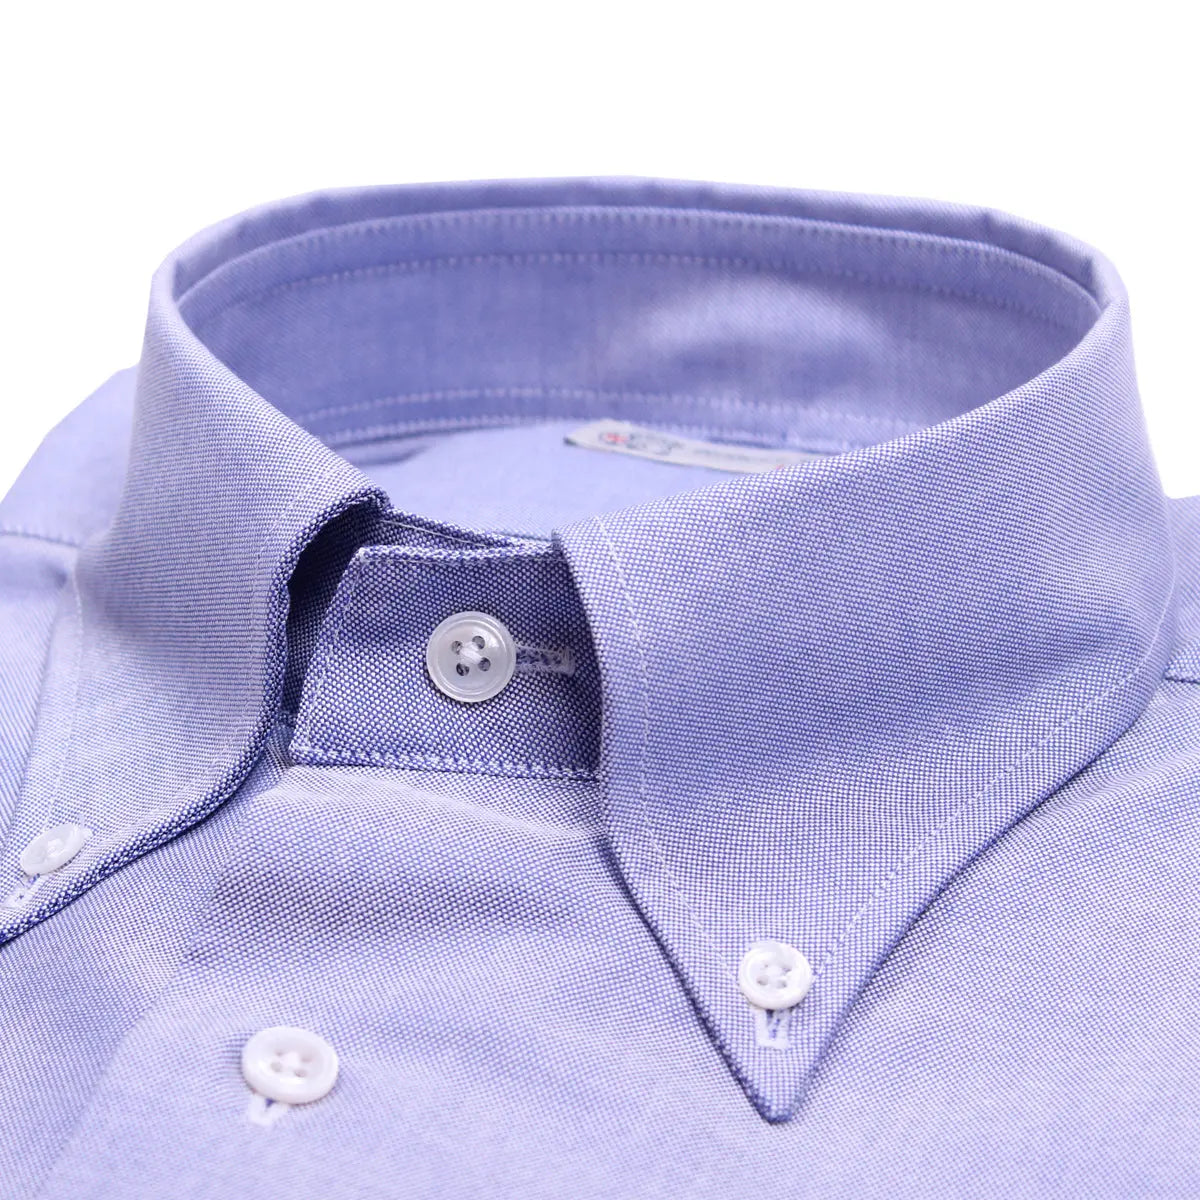 Blue Twill Swiss Cotton Oxford Shirt  Robert Old   